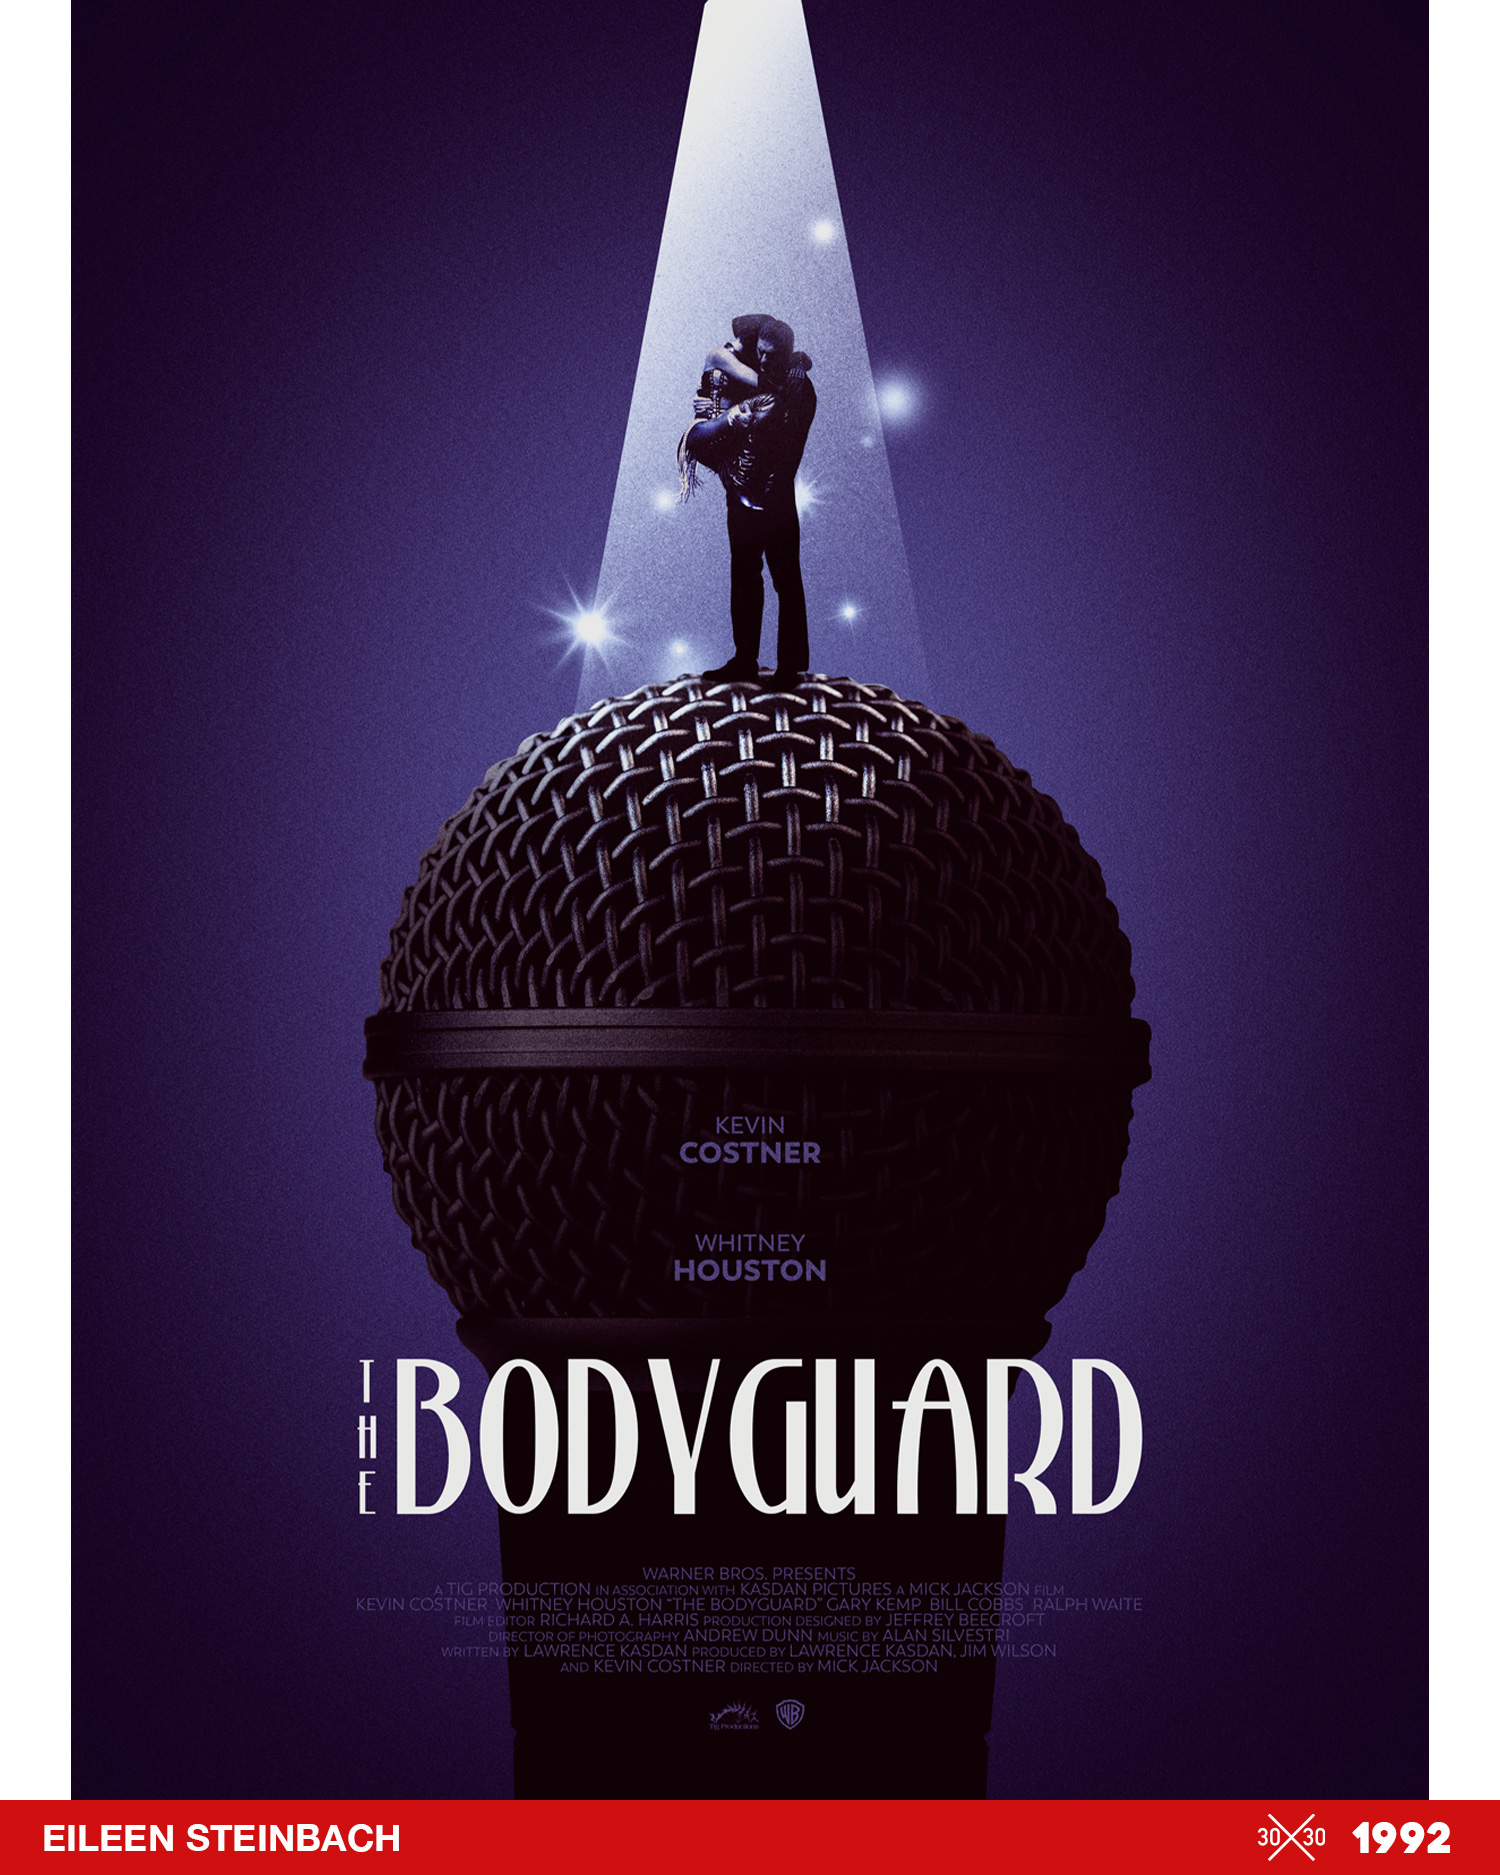 The Bodyguard by Eileen Steinbach - Home of the Alternative Movie